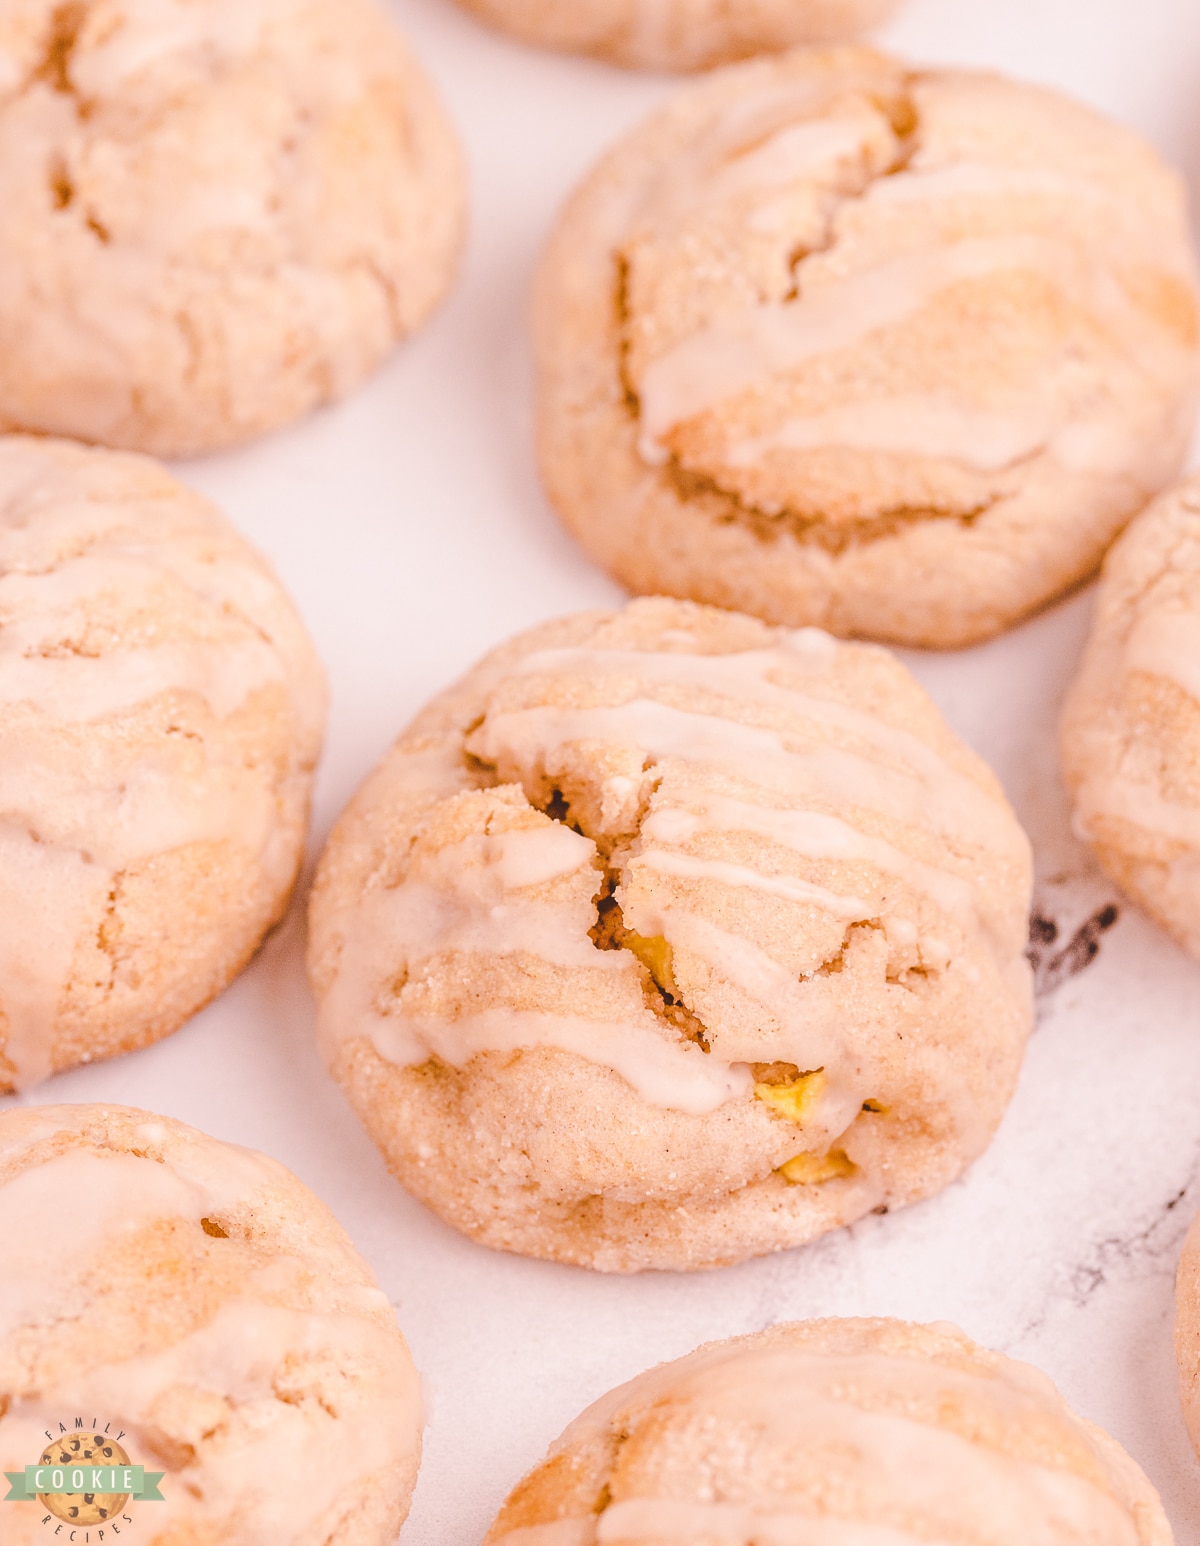 scone cookies with apple cinnamon flavors